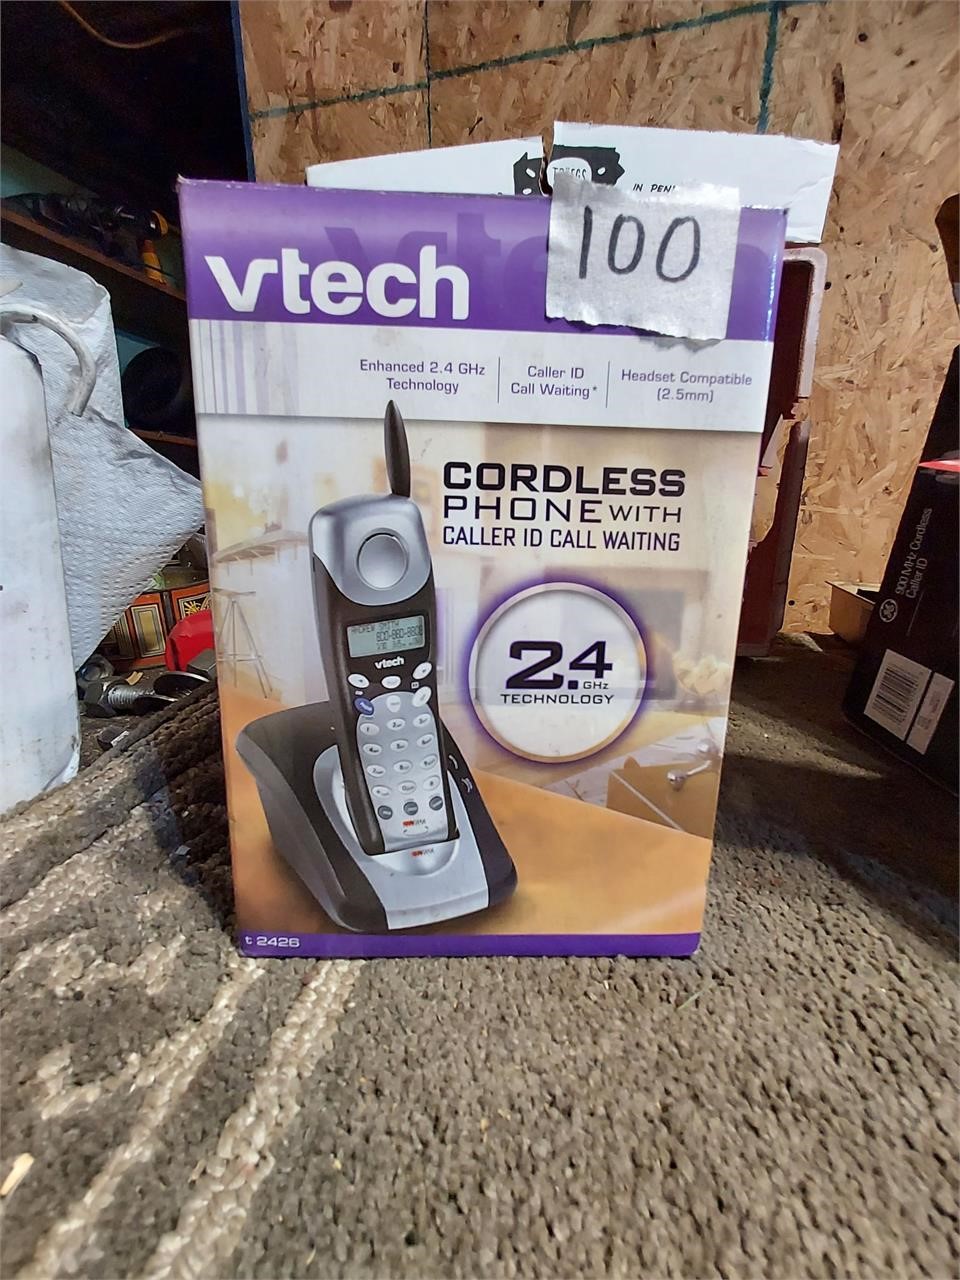 VTech cordless phone